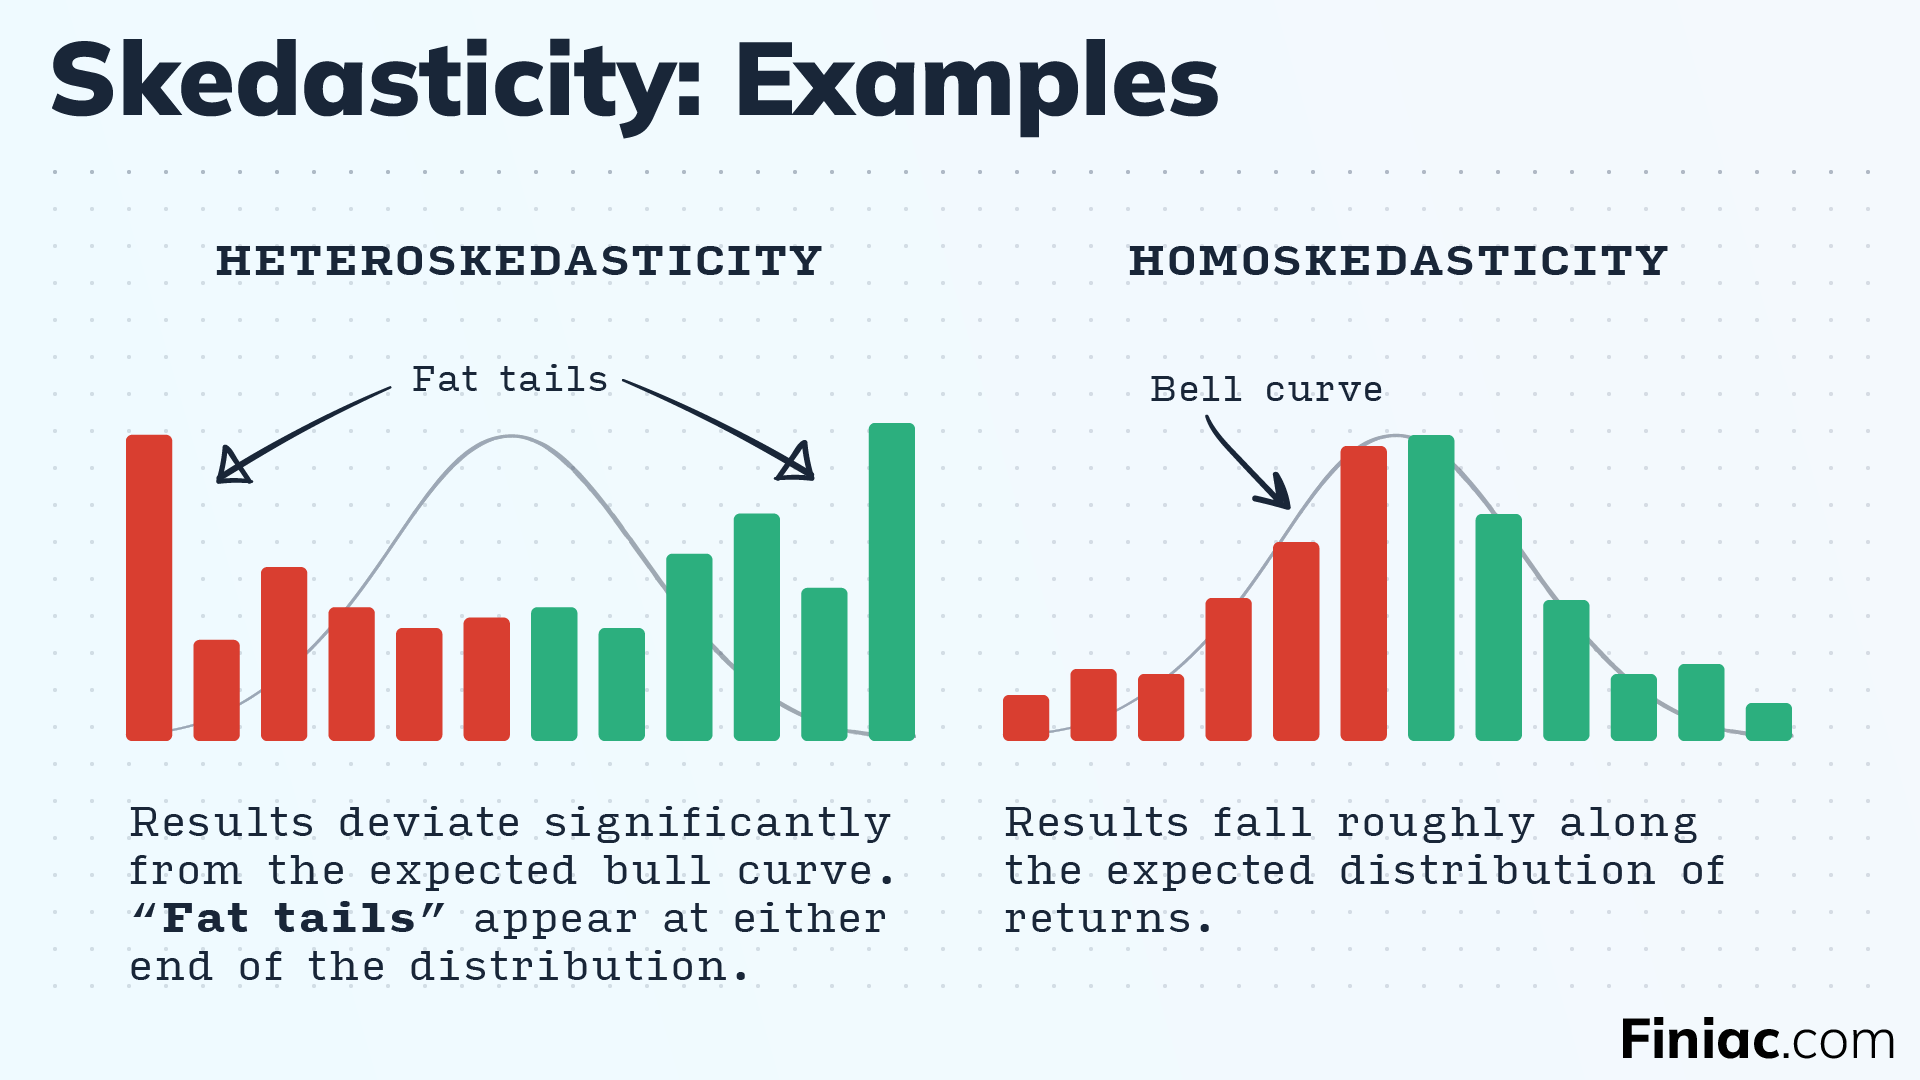 Graphic examples of skedasticity (heteroskedasticity and homoskedasticity).